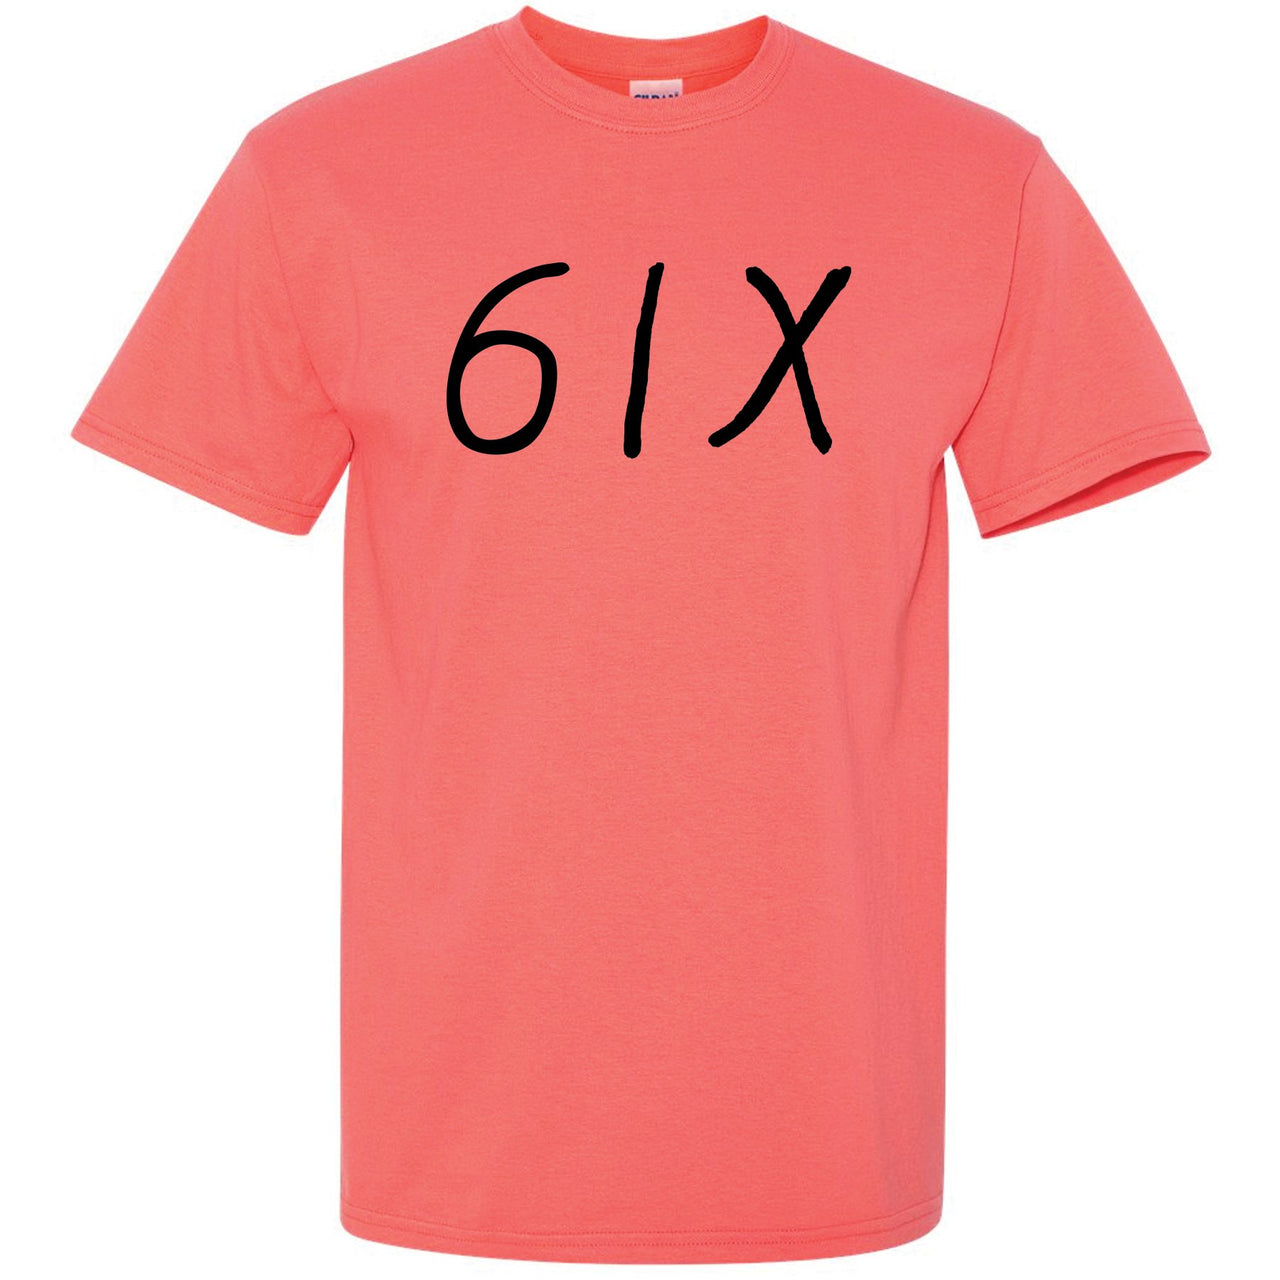 Infrared 6s T Shirt | 6ix, Infrared